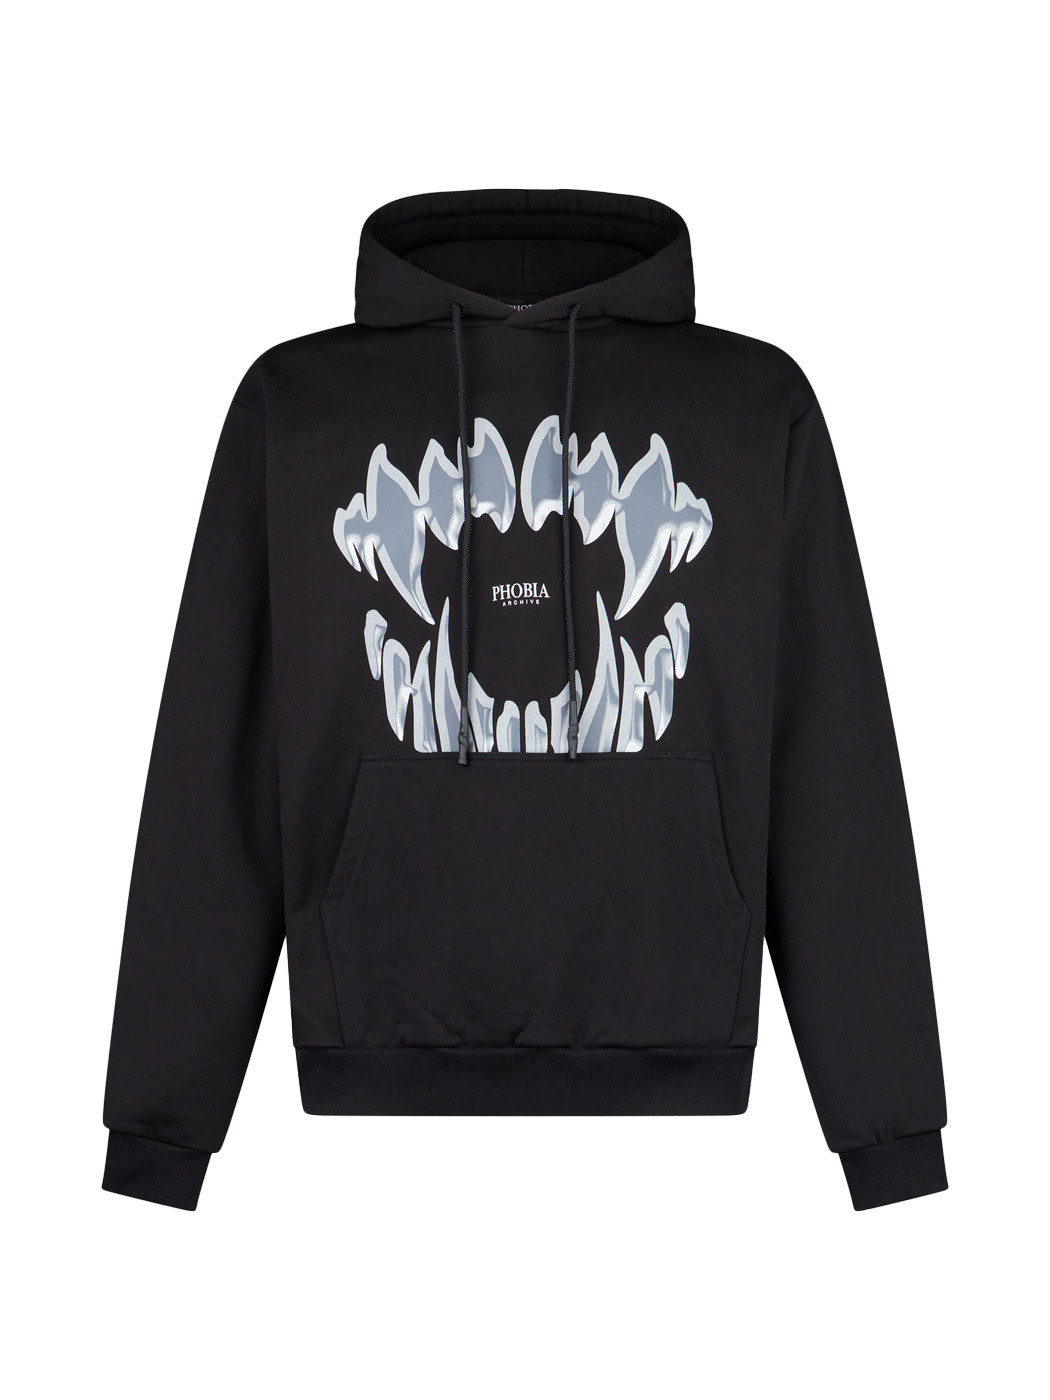 Phobia - Cotton sweatshirt with bite print, Black, large image number 0